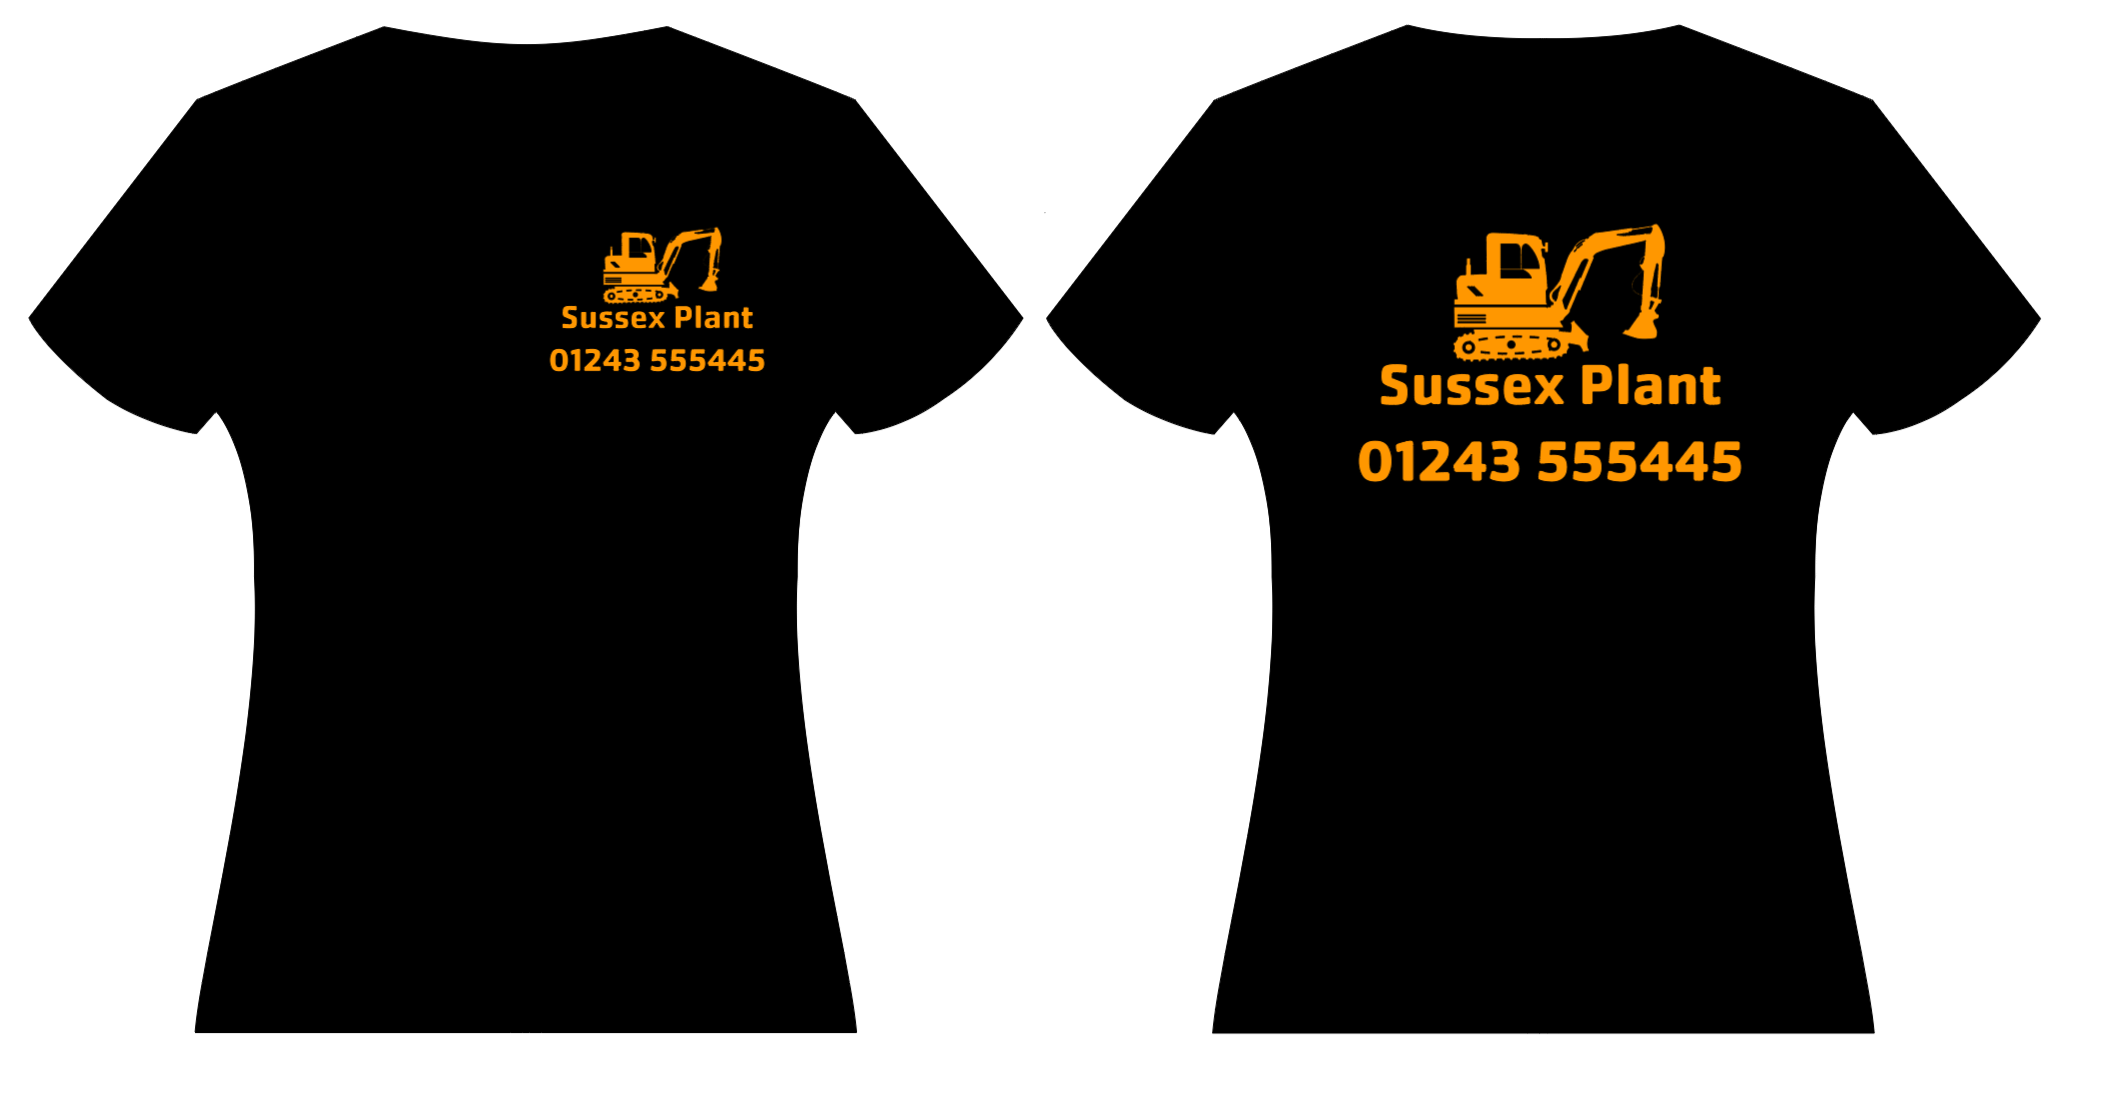 Sussex Plant T-shirts